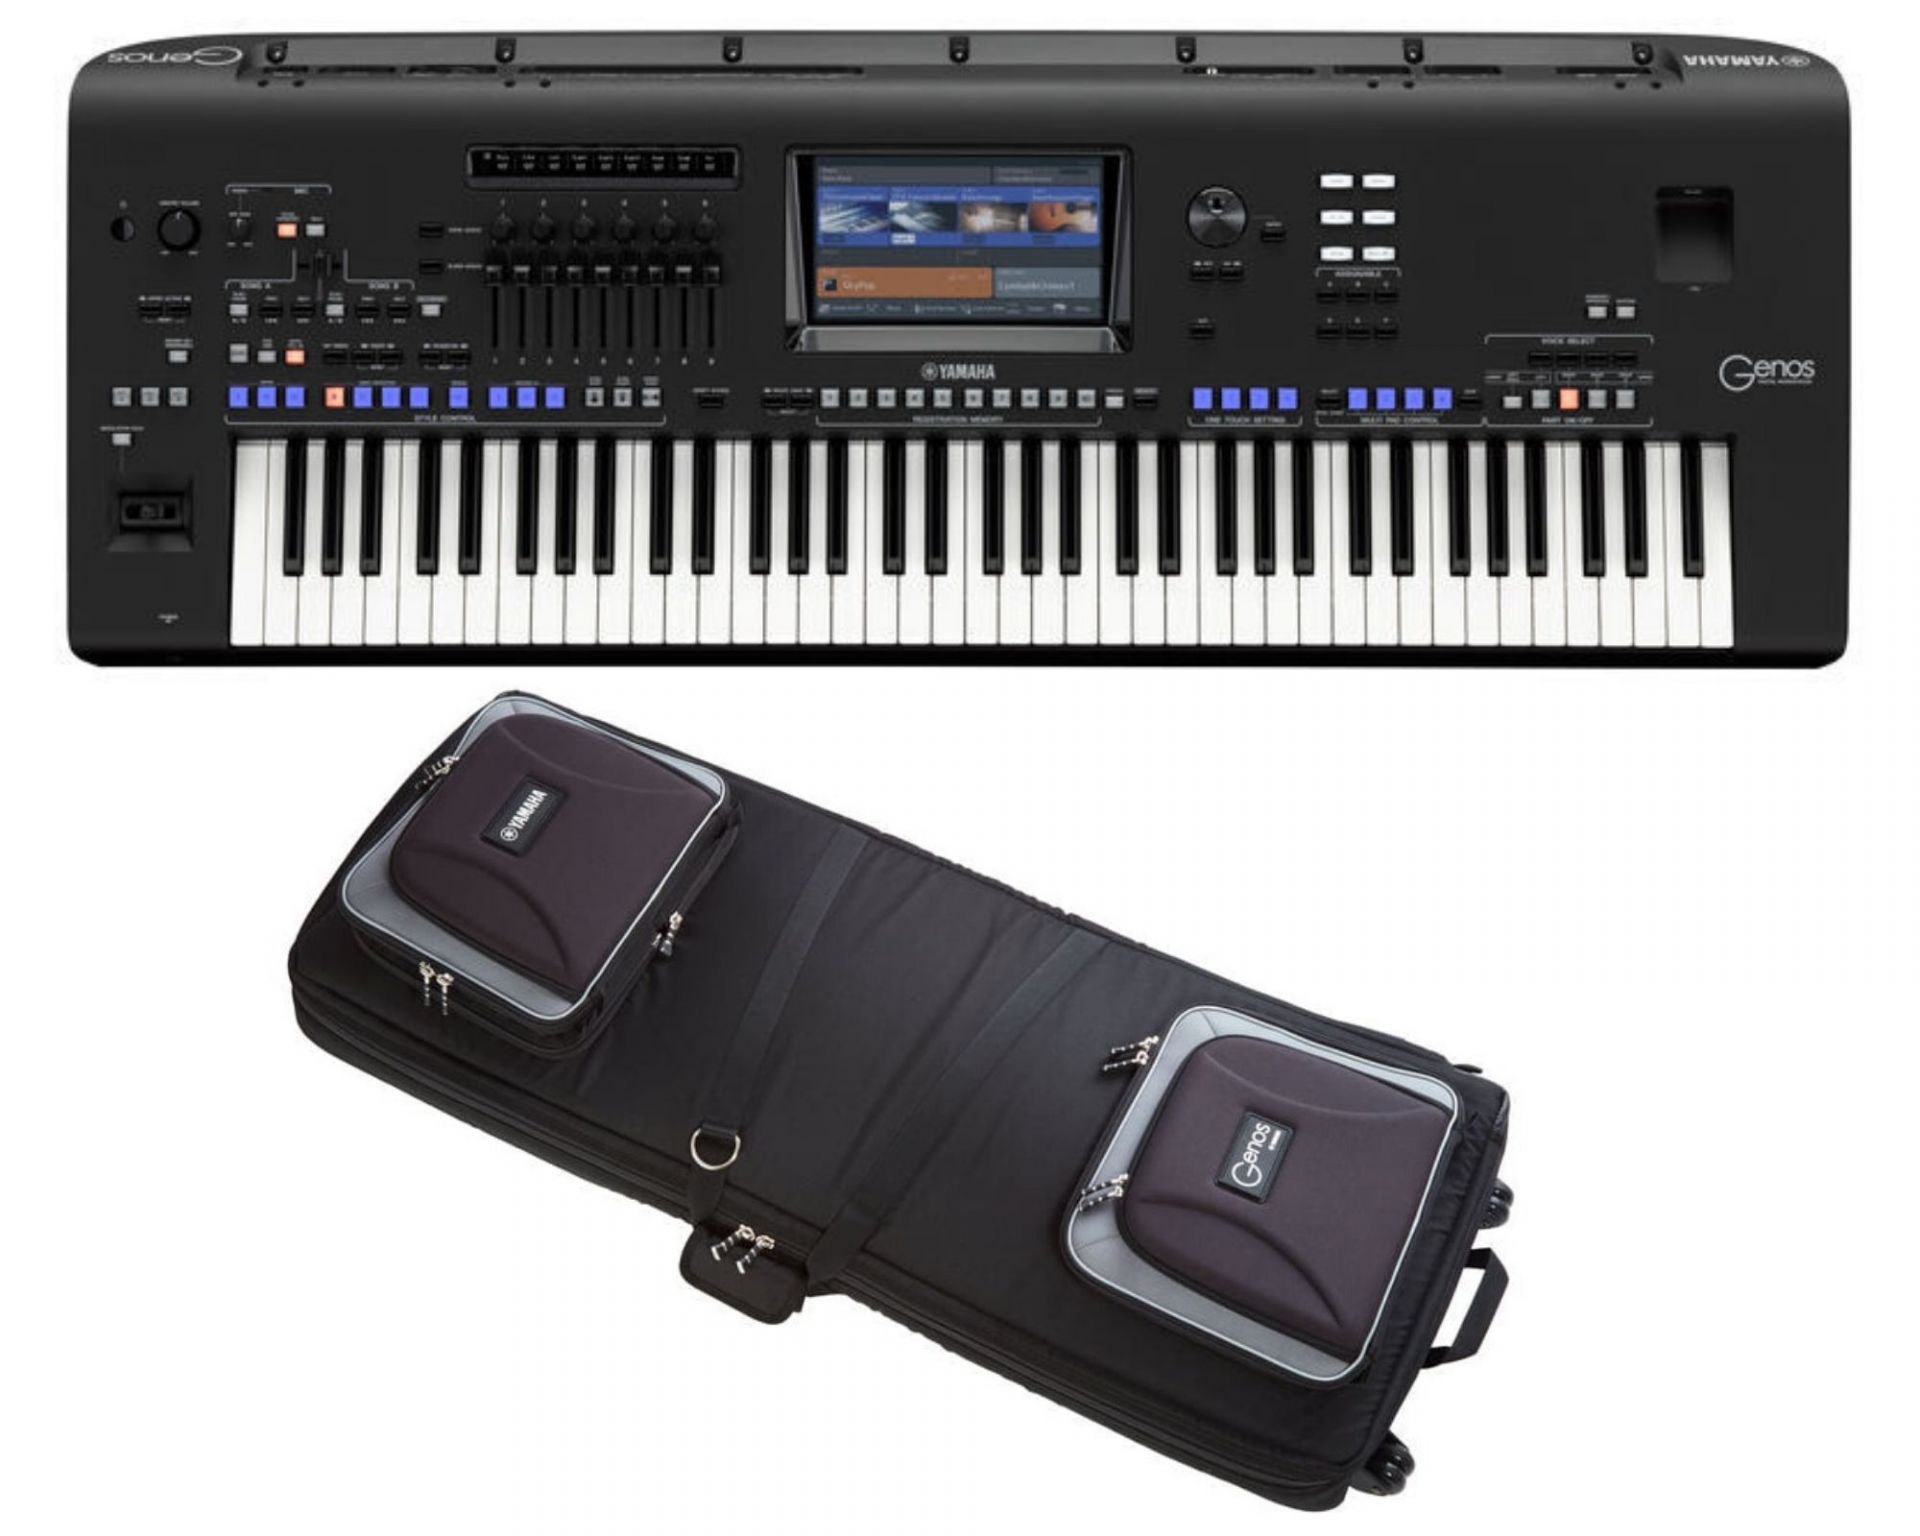 Set Keyboard Yamaha Genos with Cover Set